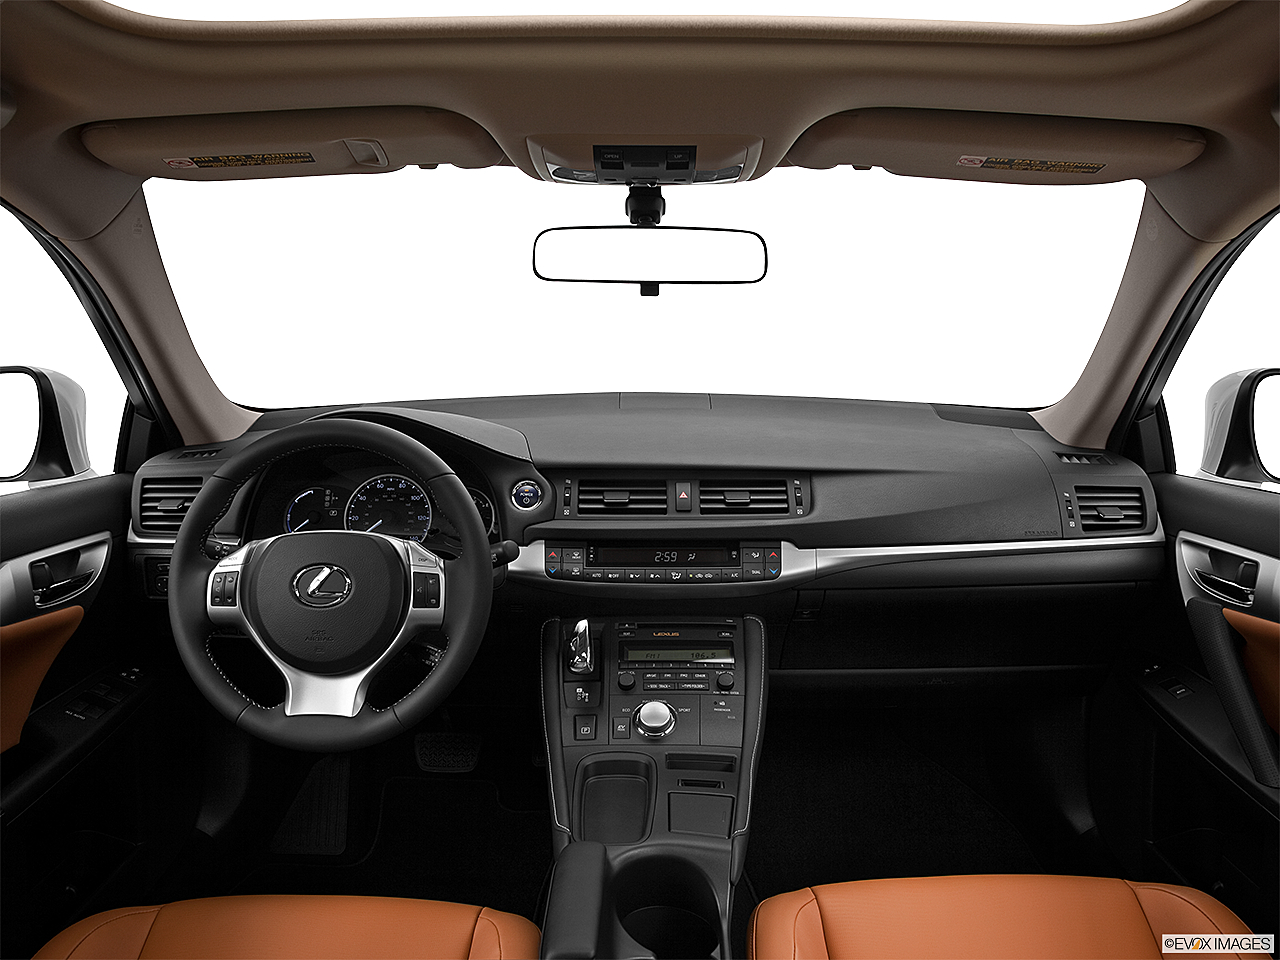 2013 Lexus CT 200h 4dr Hatchback - Research - GrooveCar